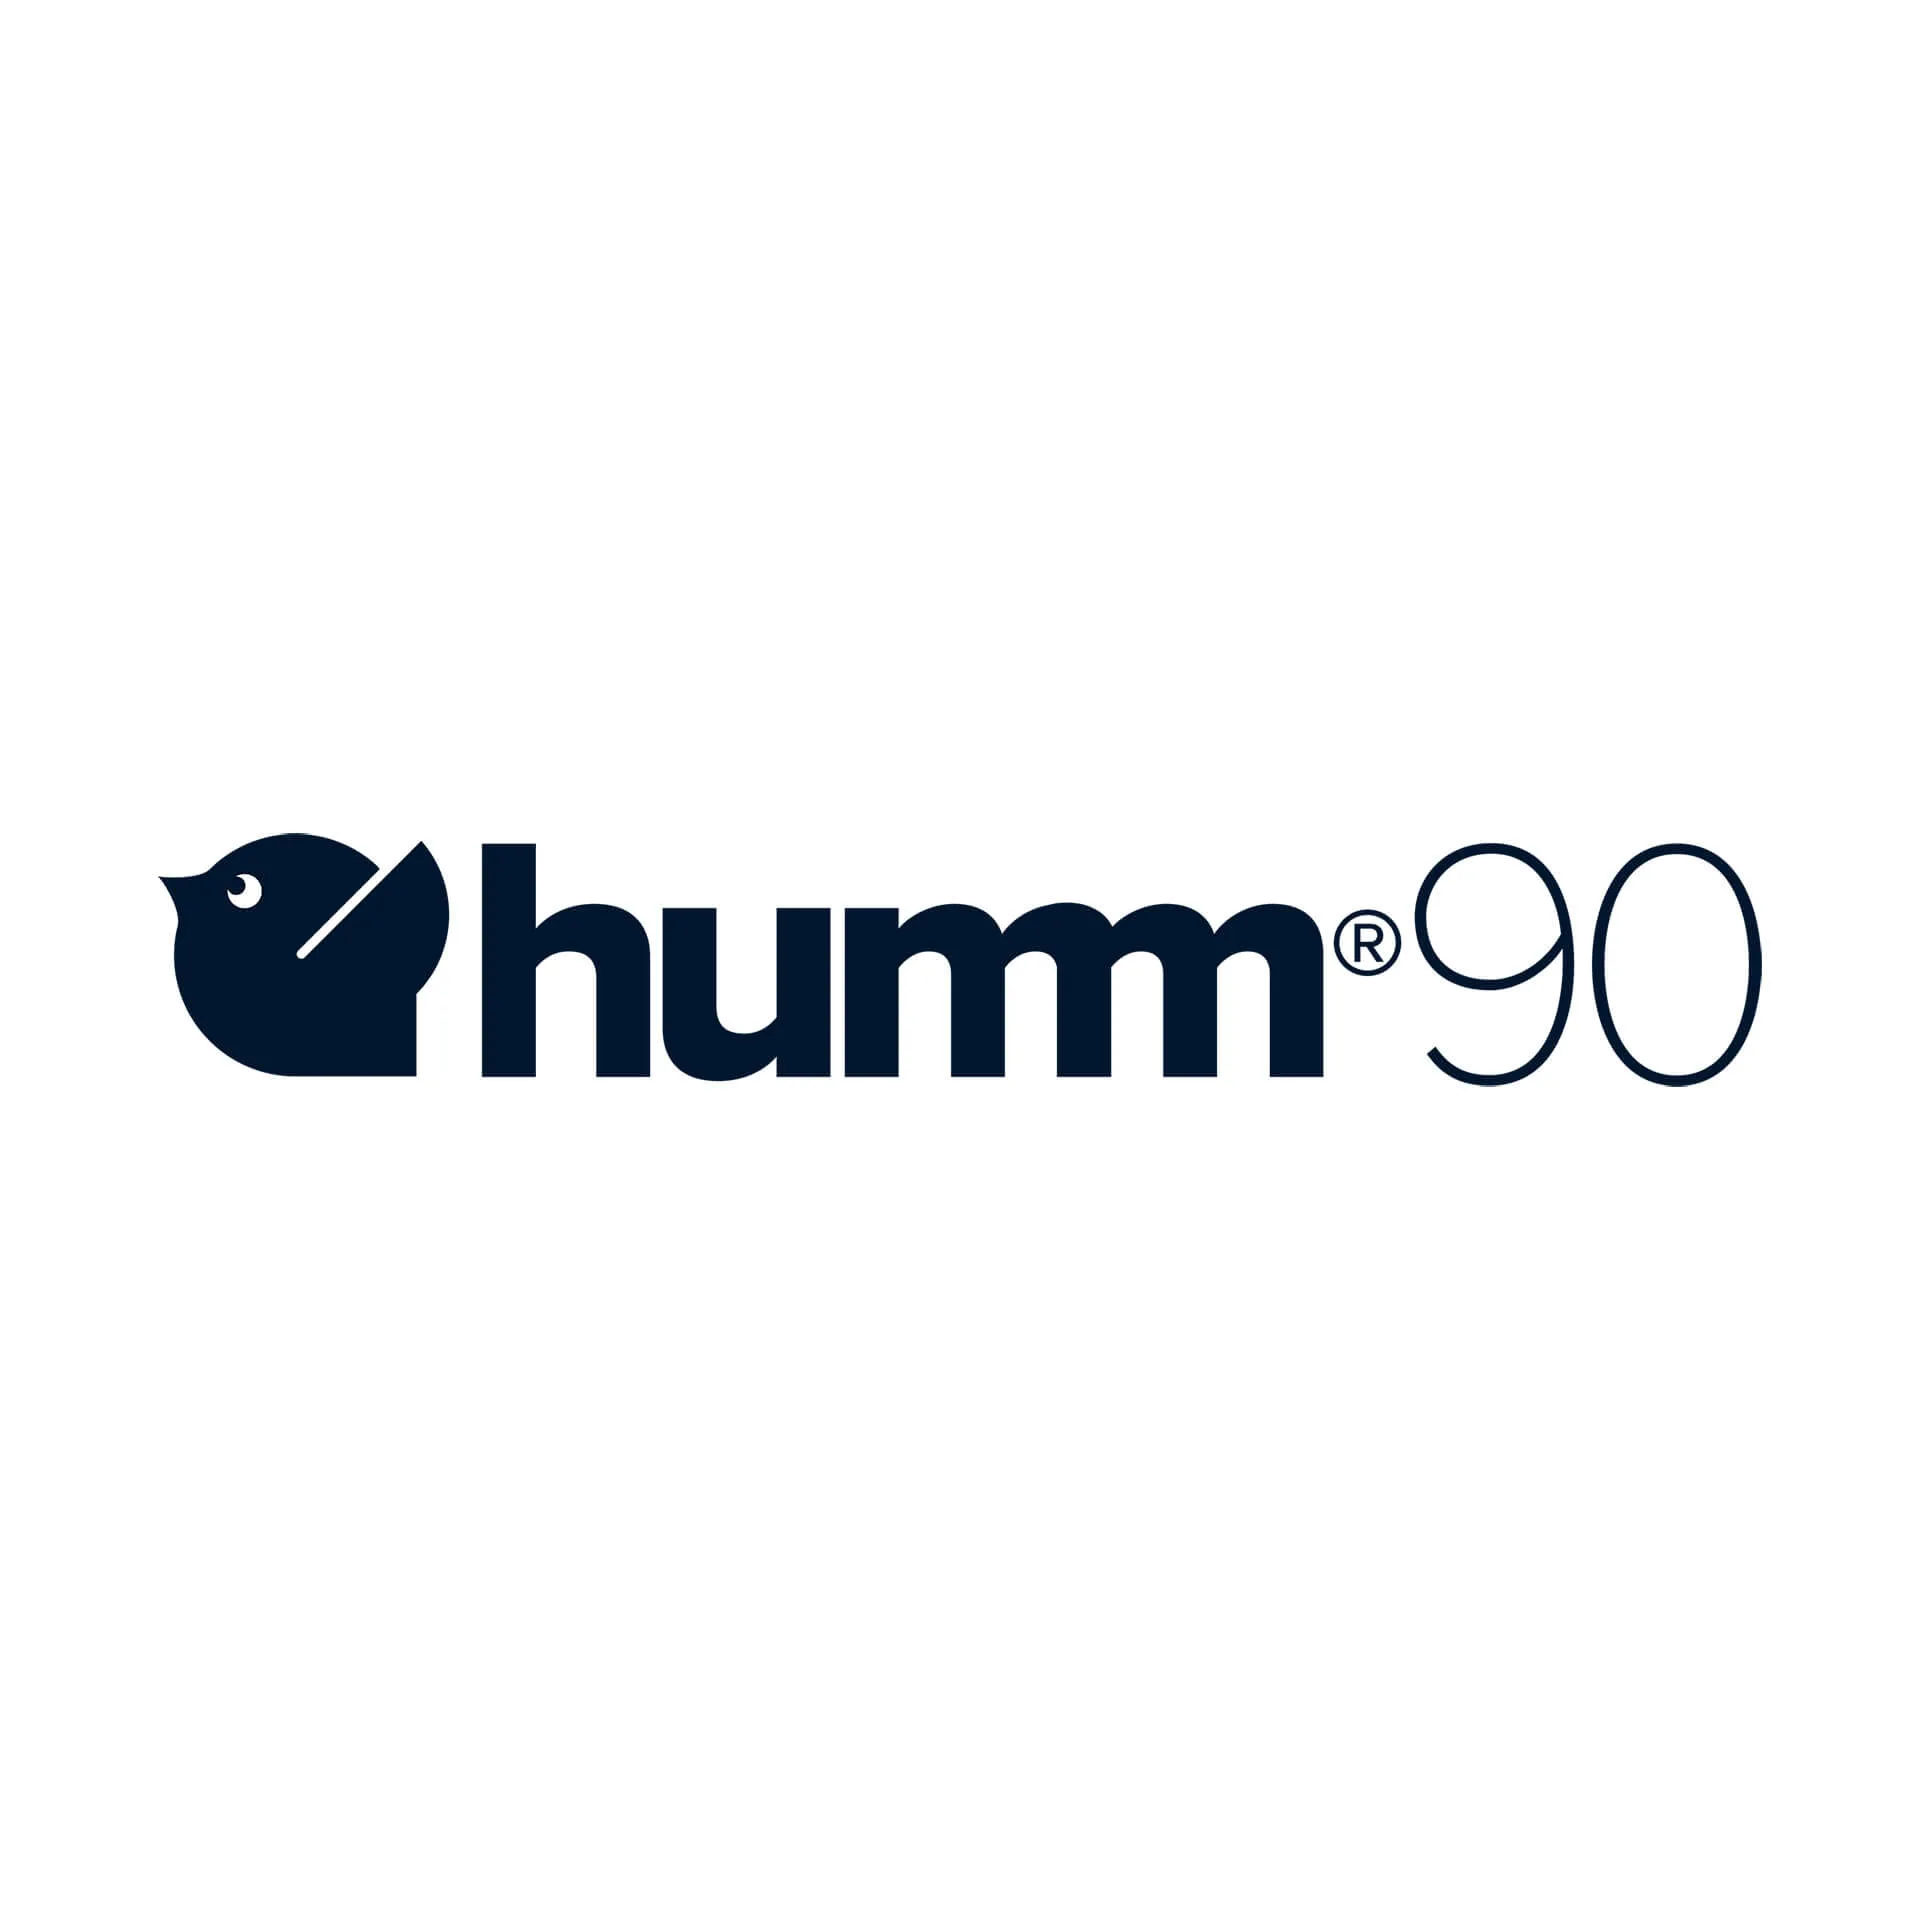 humm90 Logo